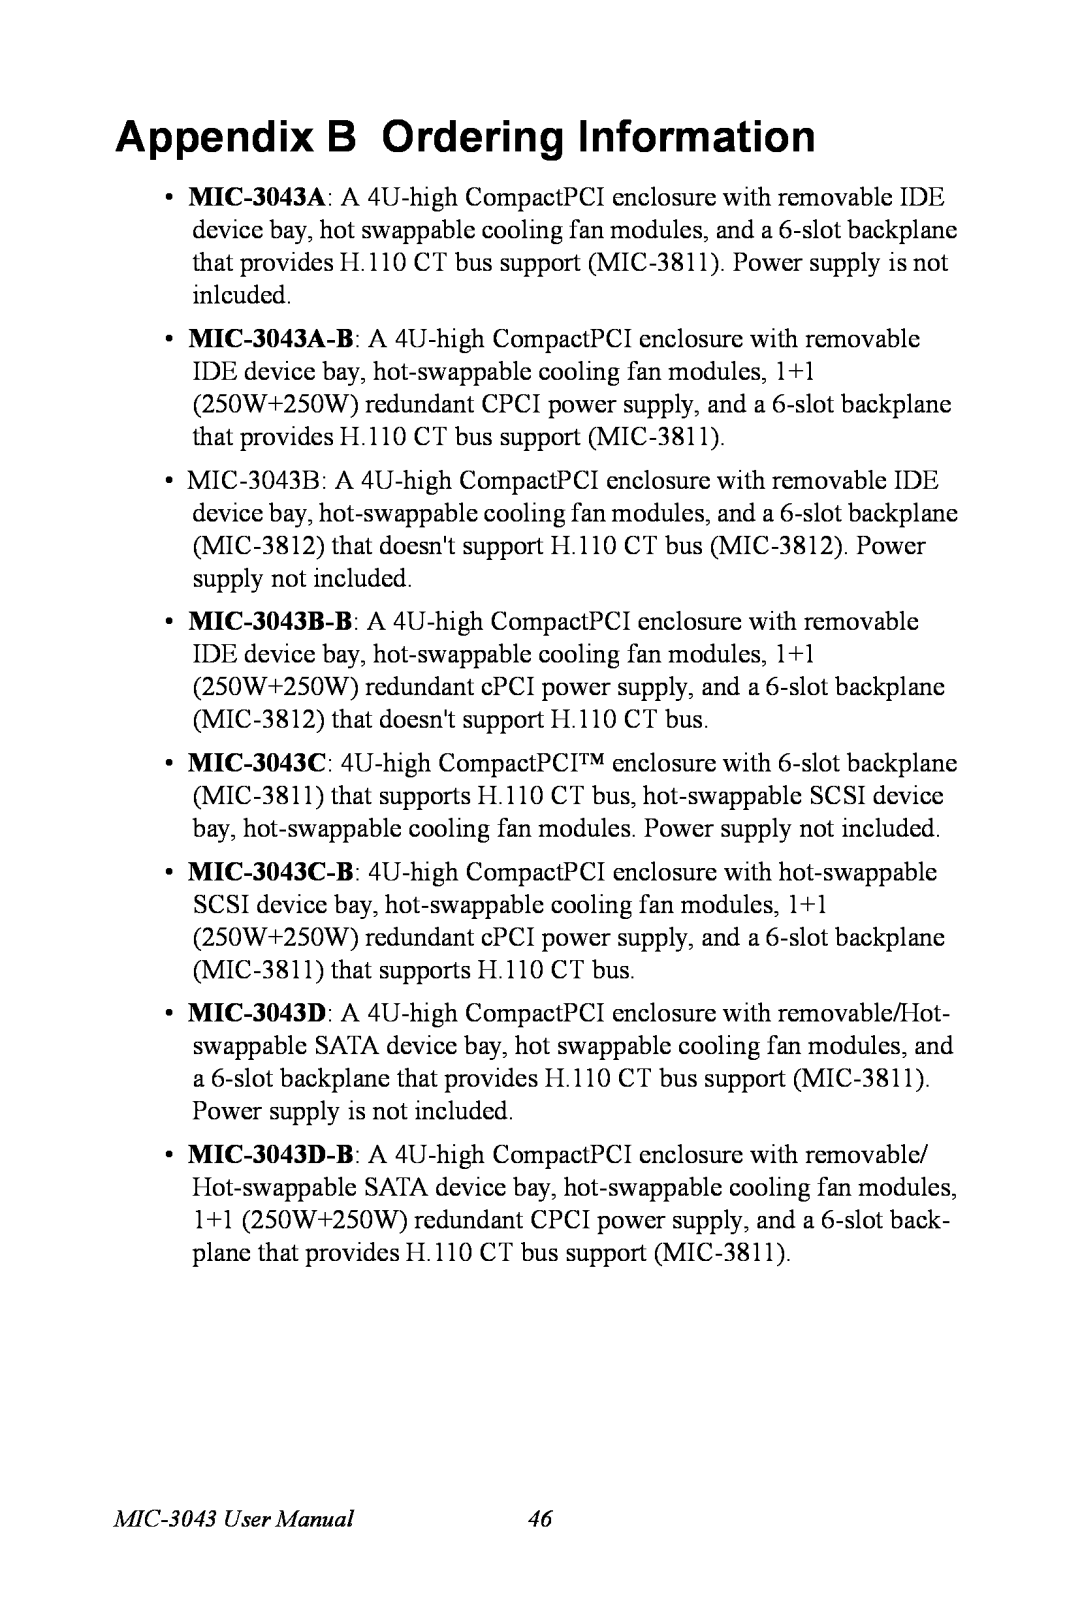 Advantech MIC-3043 user manual Appendix B Ordering Information 